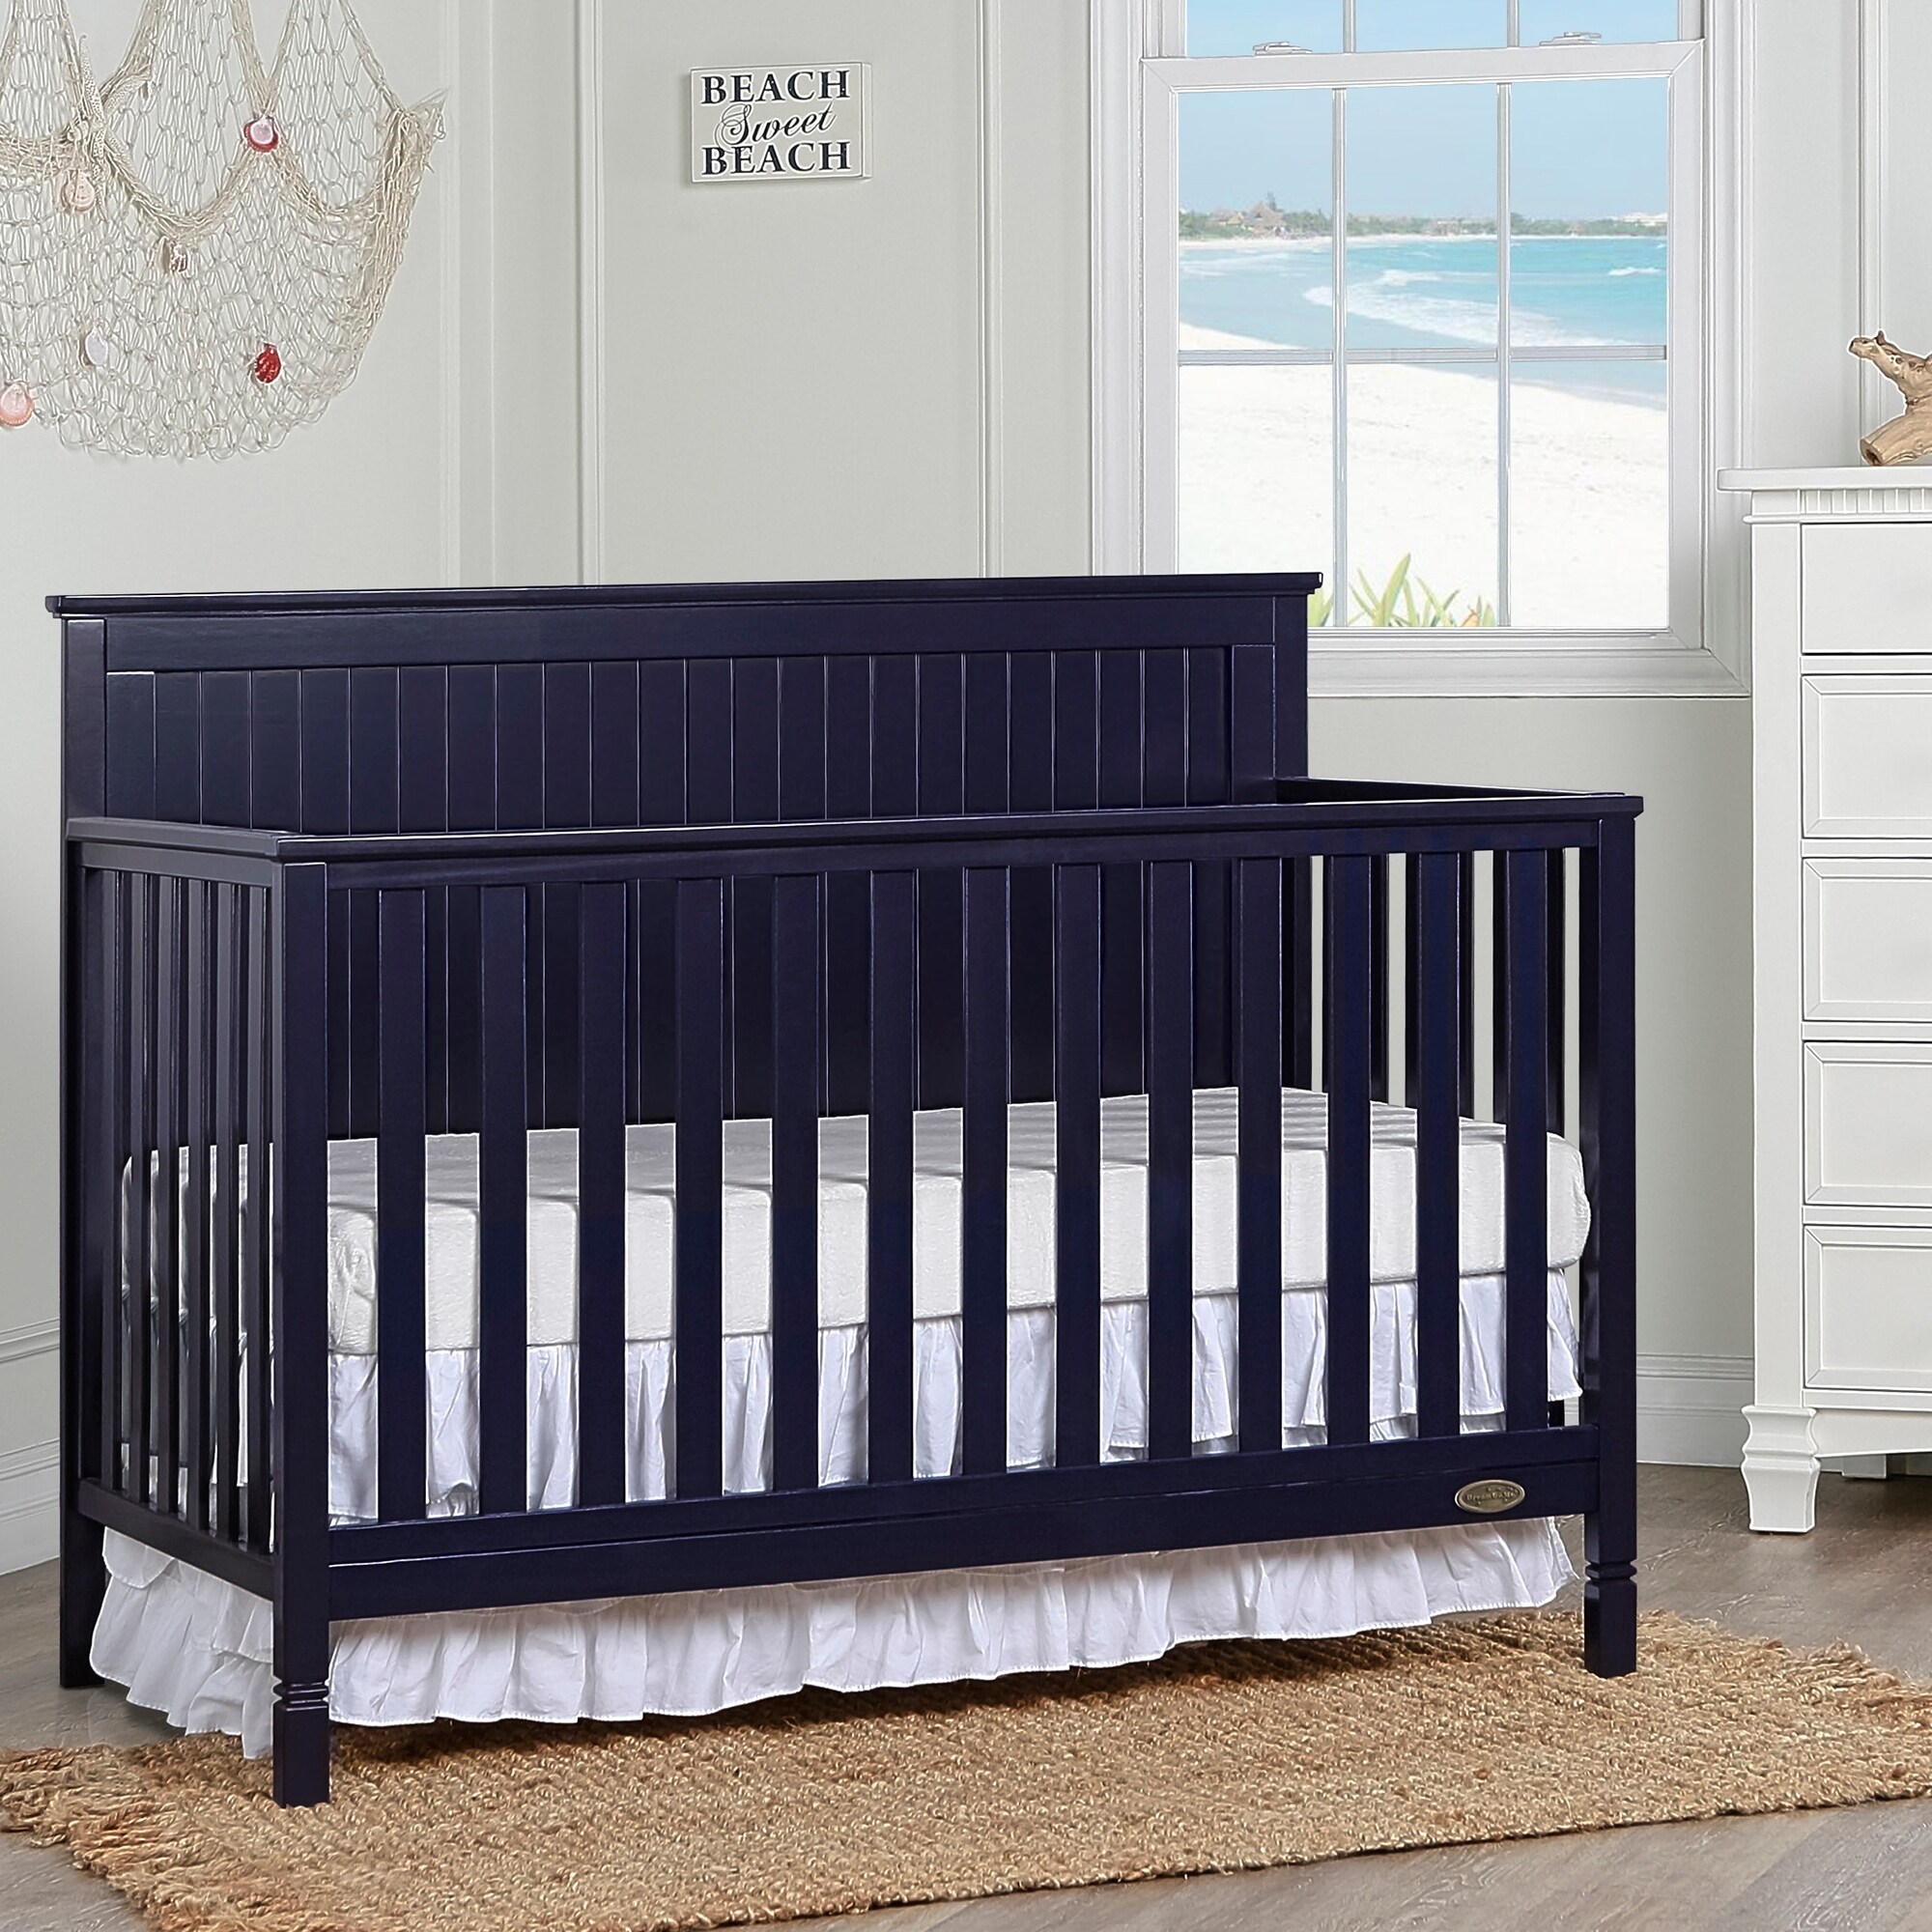 buy baby crib online